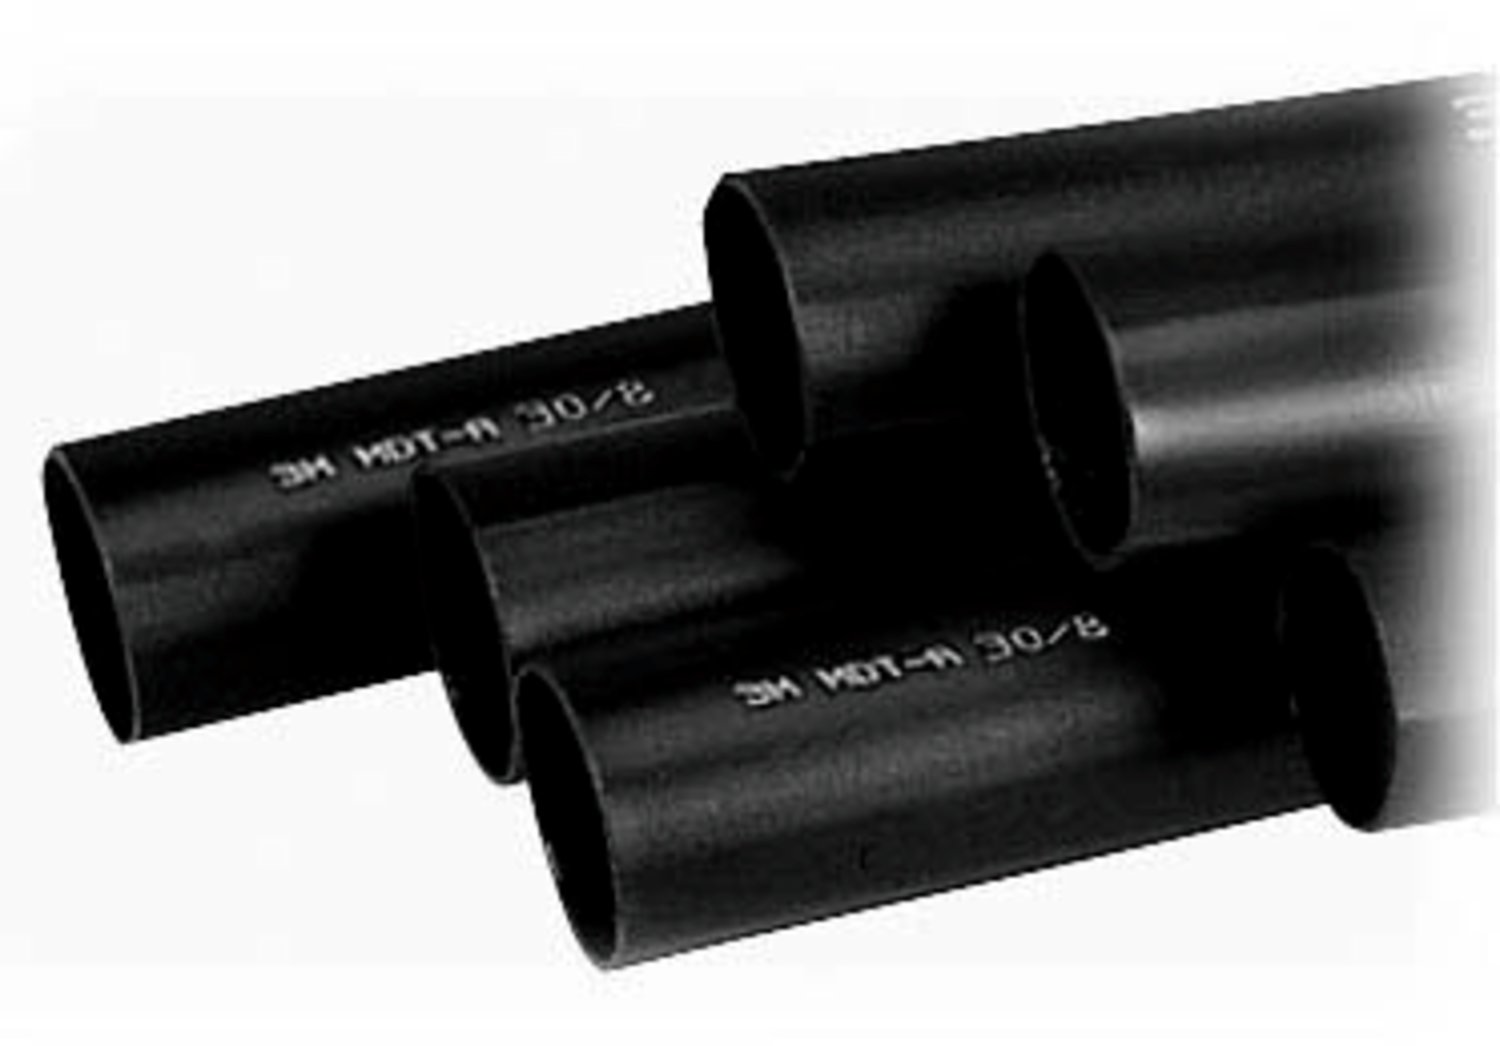 7100034432 - 3M Multiple Wall Semi-Rigid Polyolefin Tubing MW, Black, 3/8 in, 48 in
length stick, 100 ft/Carton, 500 ft/Case